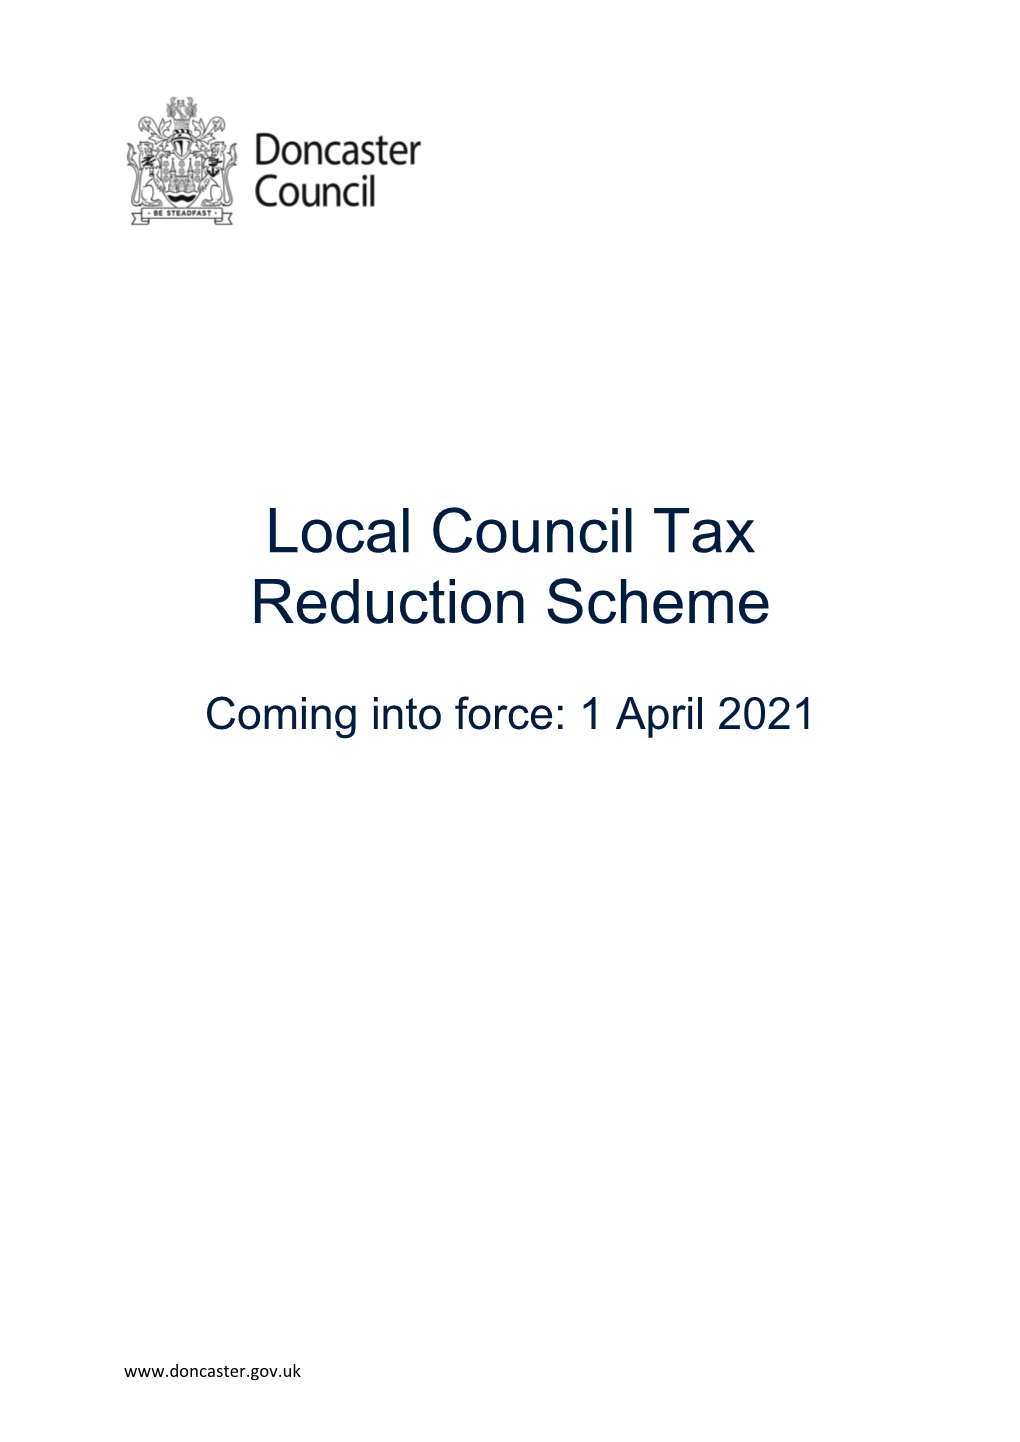 Local Council Tax Reduction Scheme